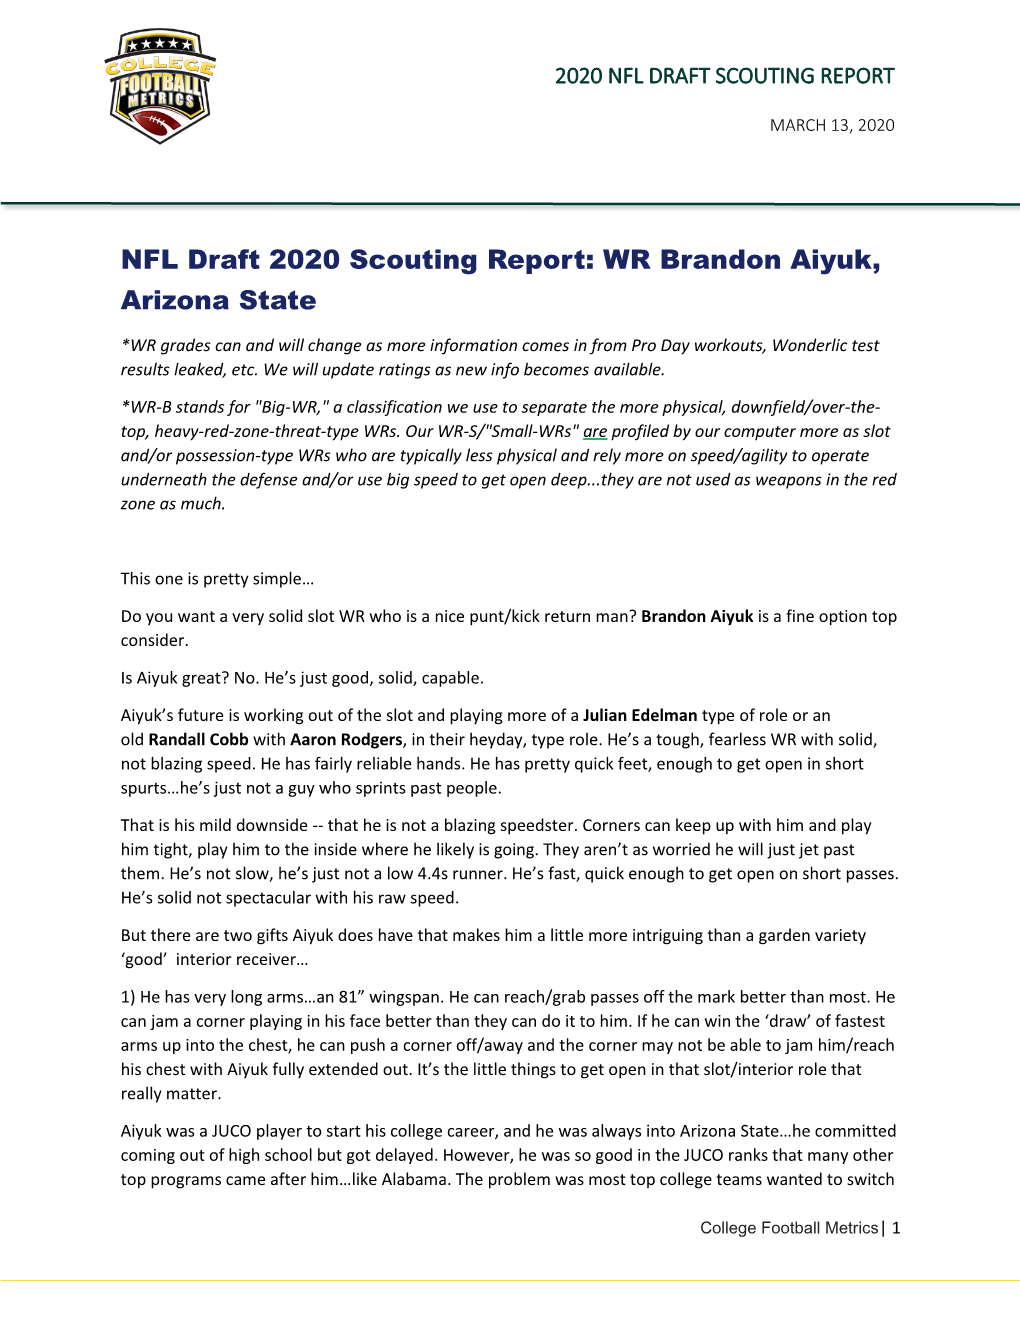 NFL Draft 2020 Scouting Report: WR Brandon Aiyuk, Arizona State